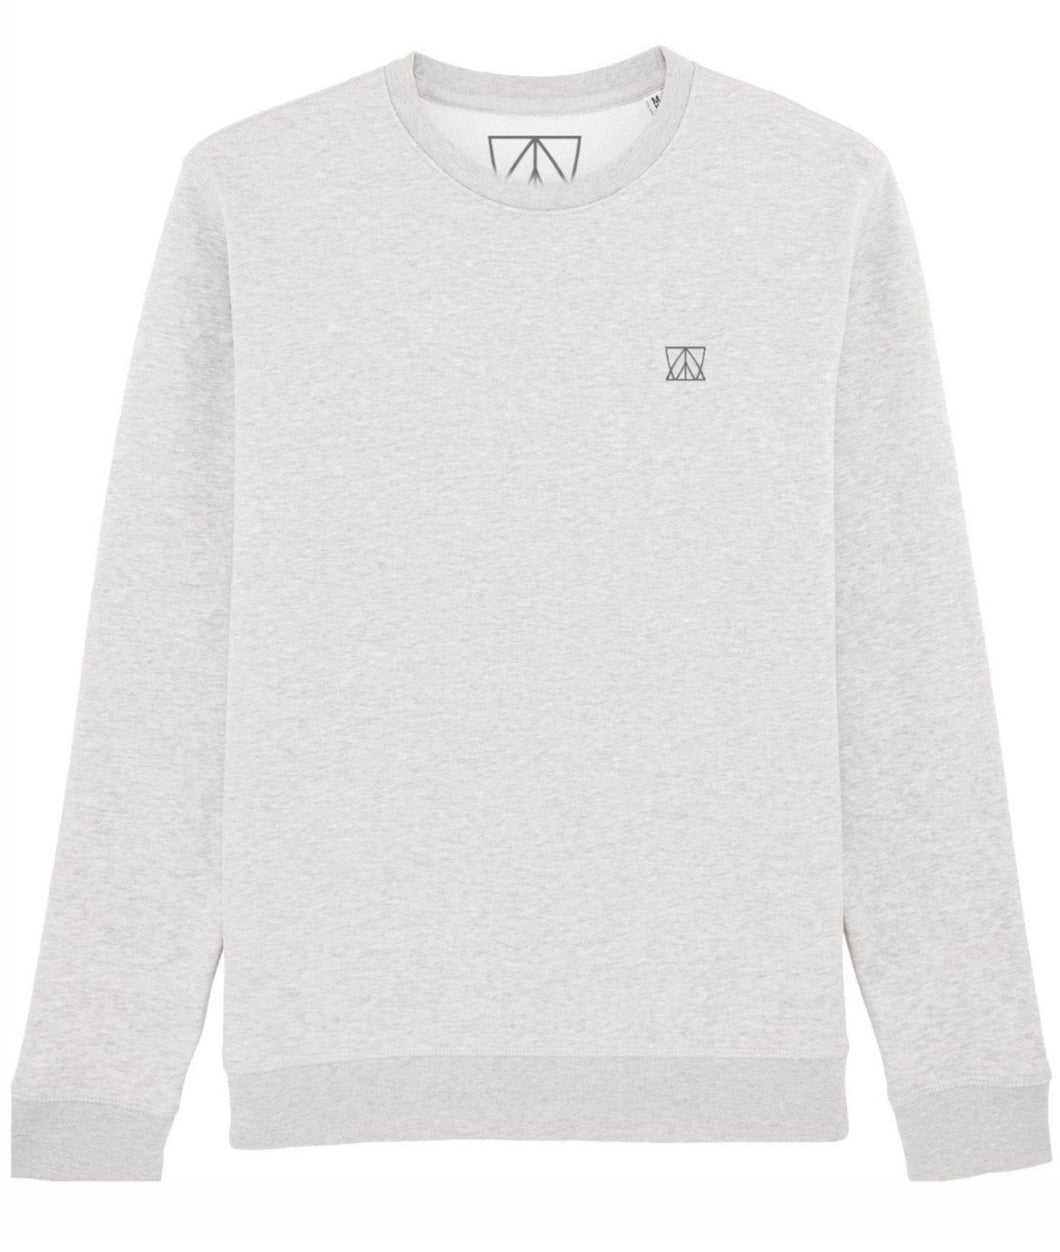 Sweater rise S&B unisex (cream grey)